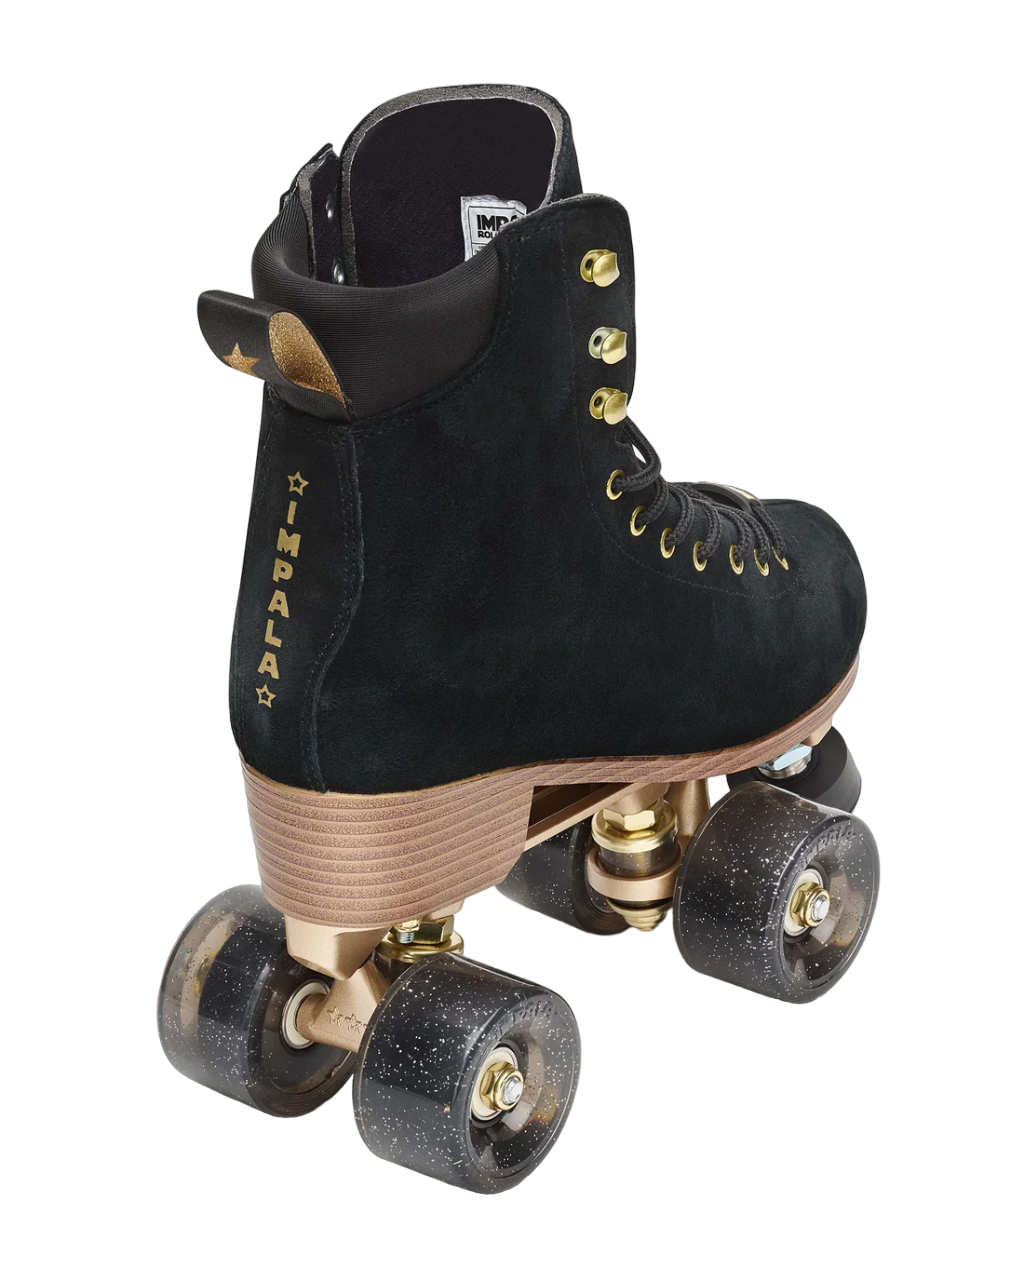 Impala Samira Quad Roller Skates - Black Night